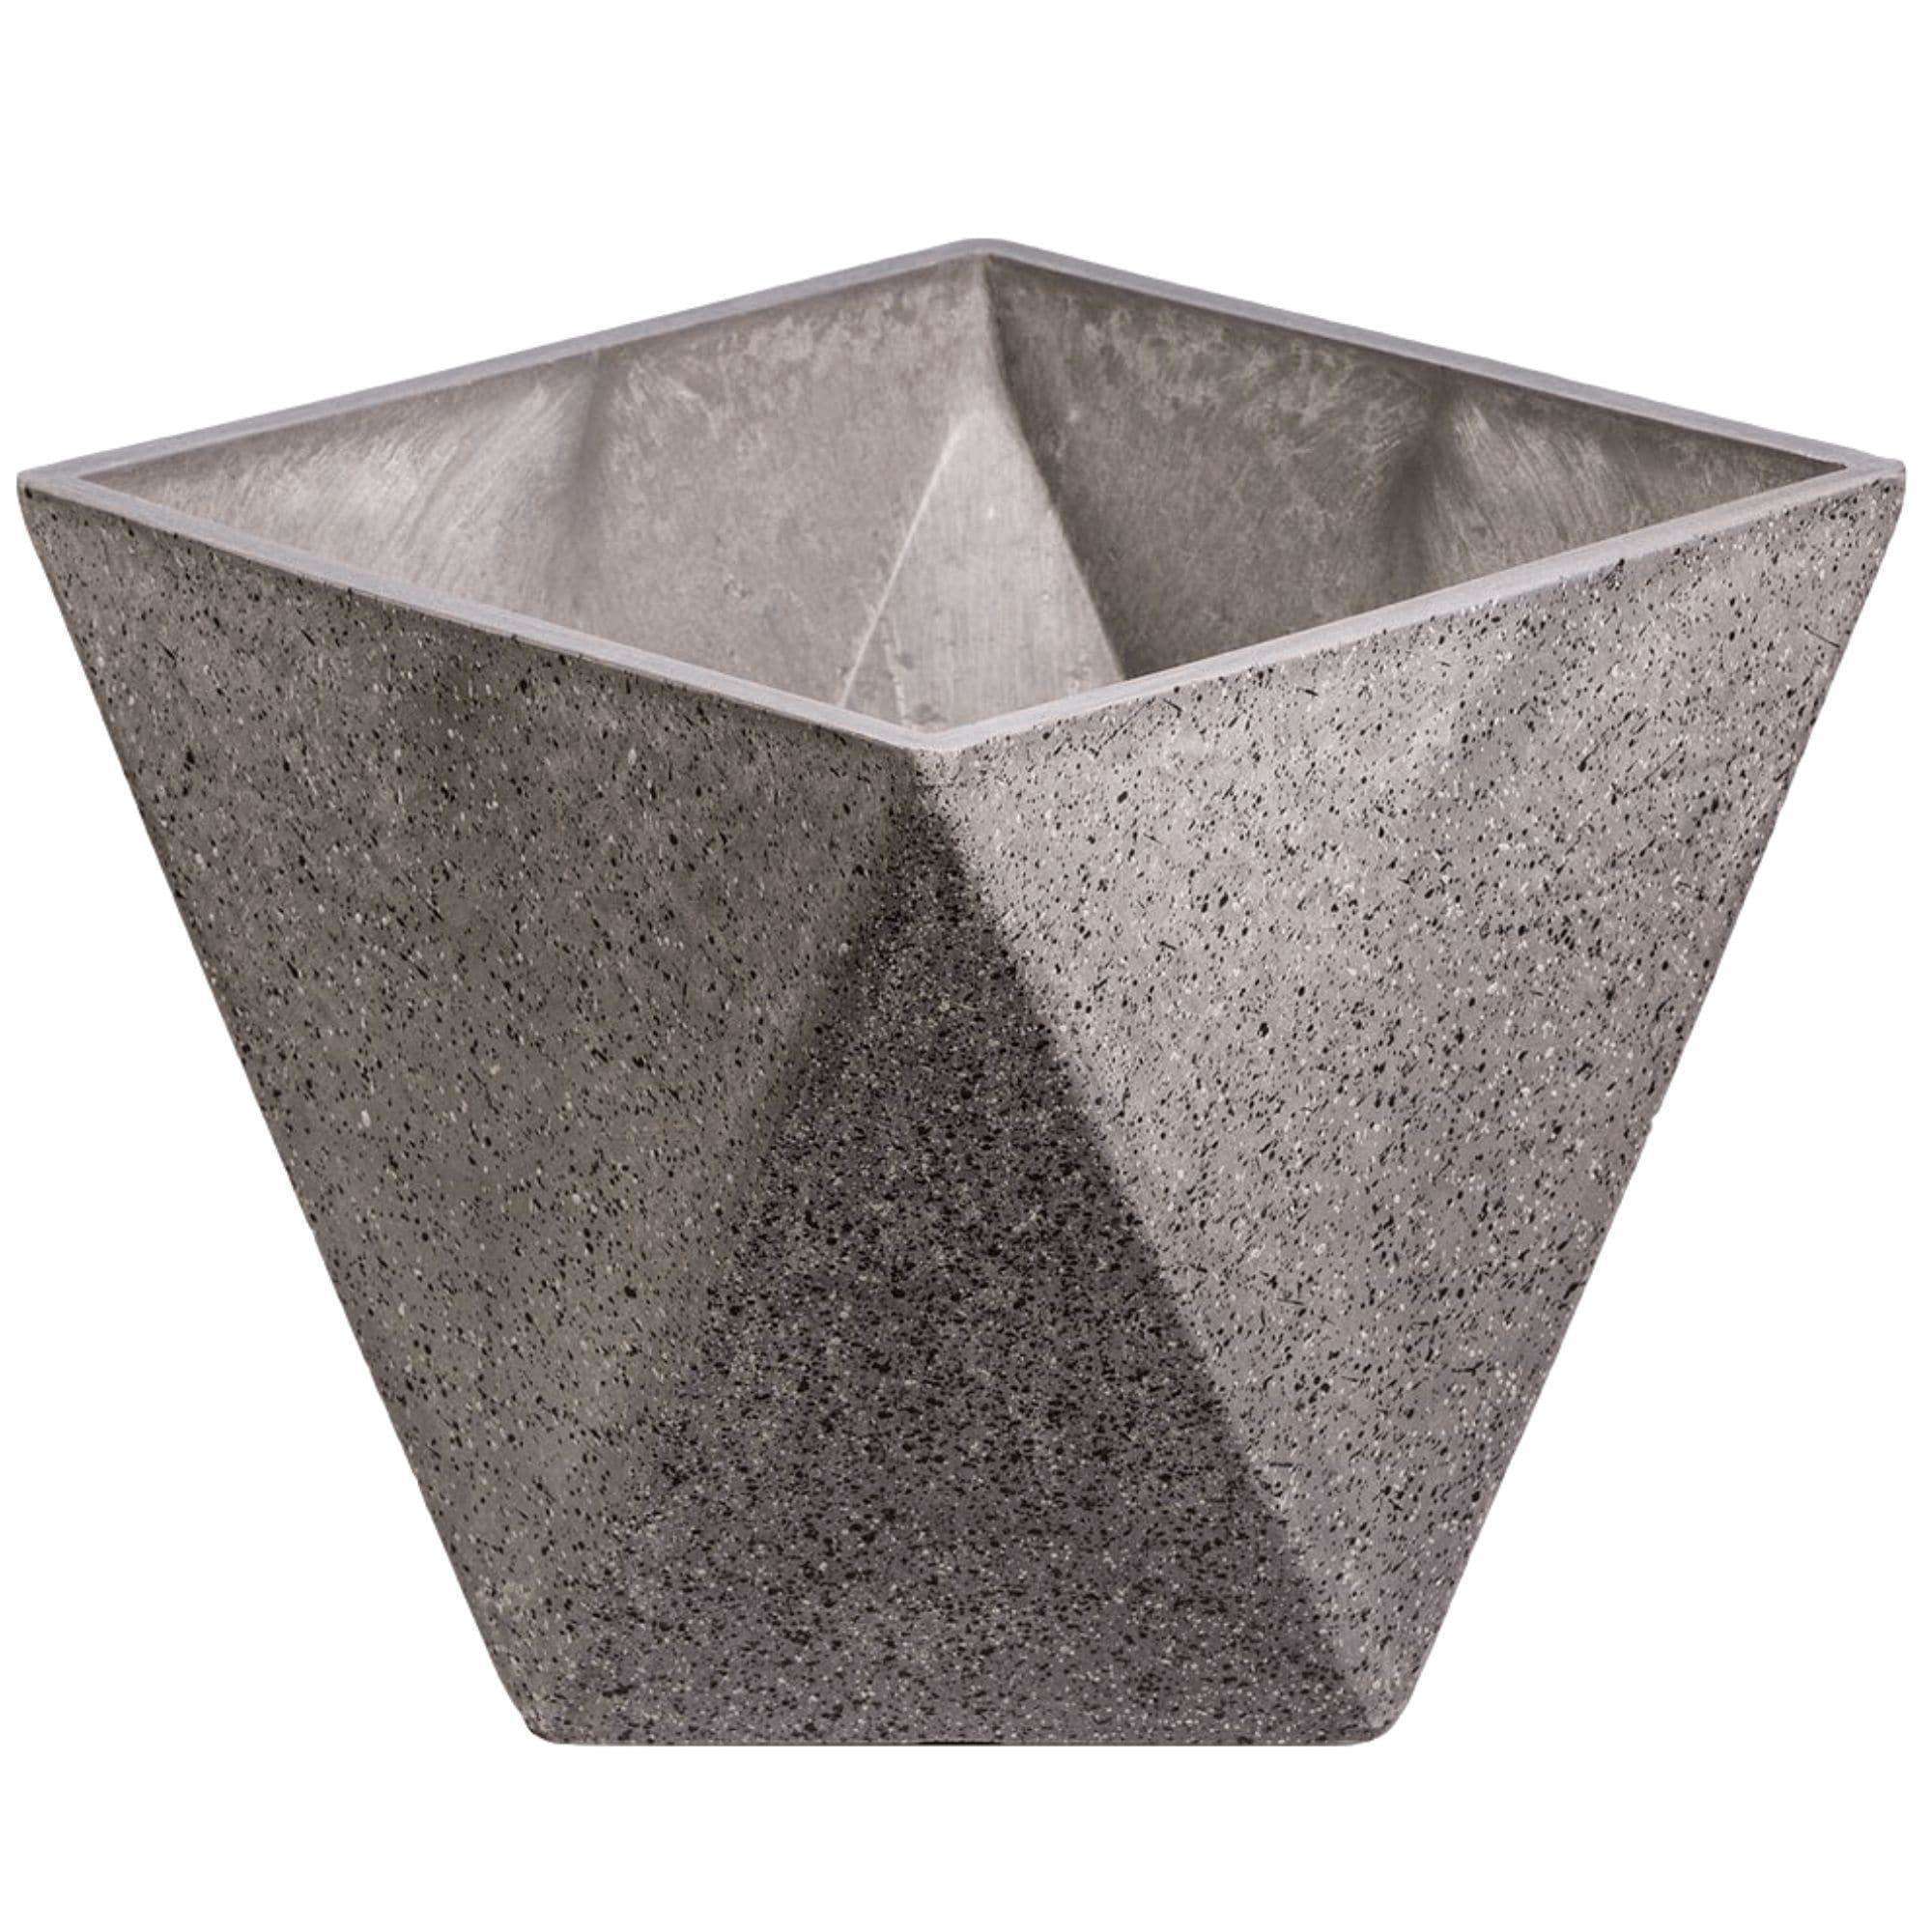 imitation-dark-stone-geometric-square-planter-30cm-808369.jpg